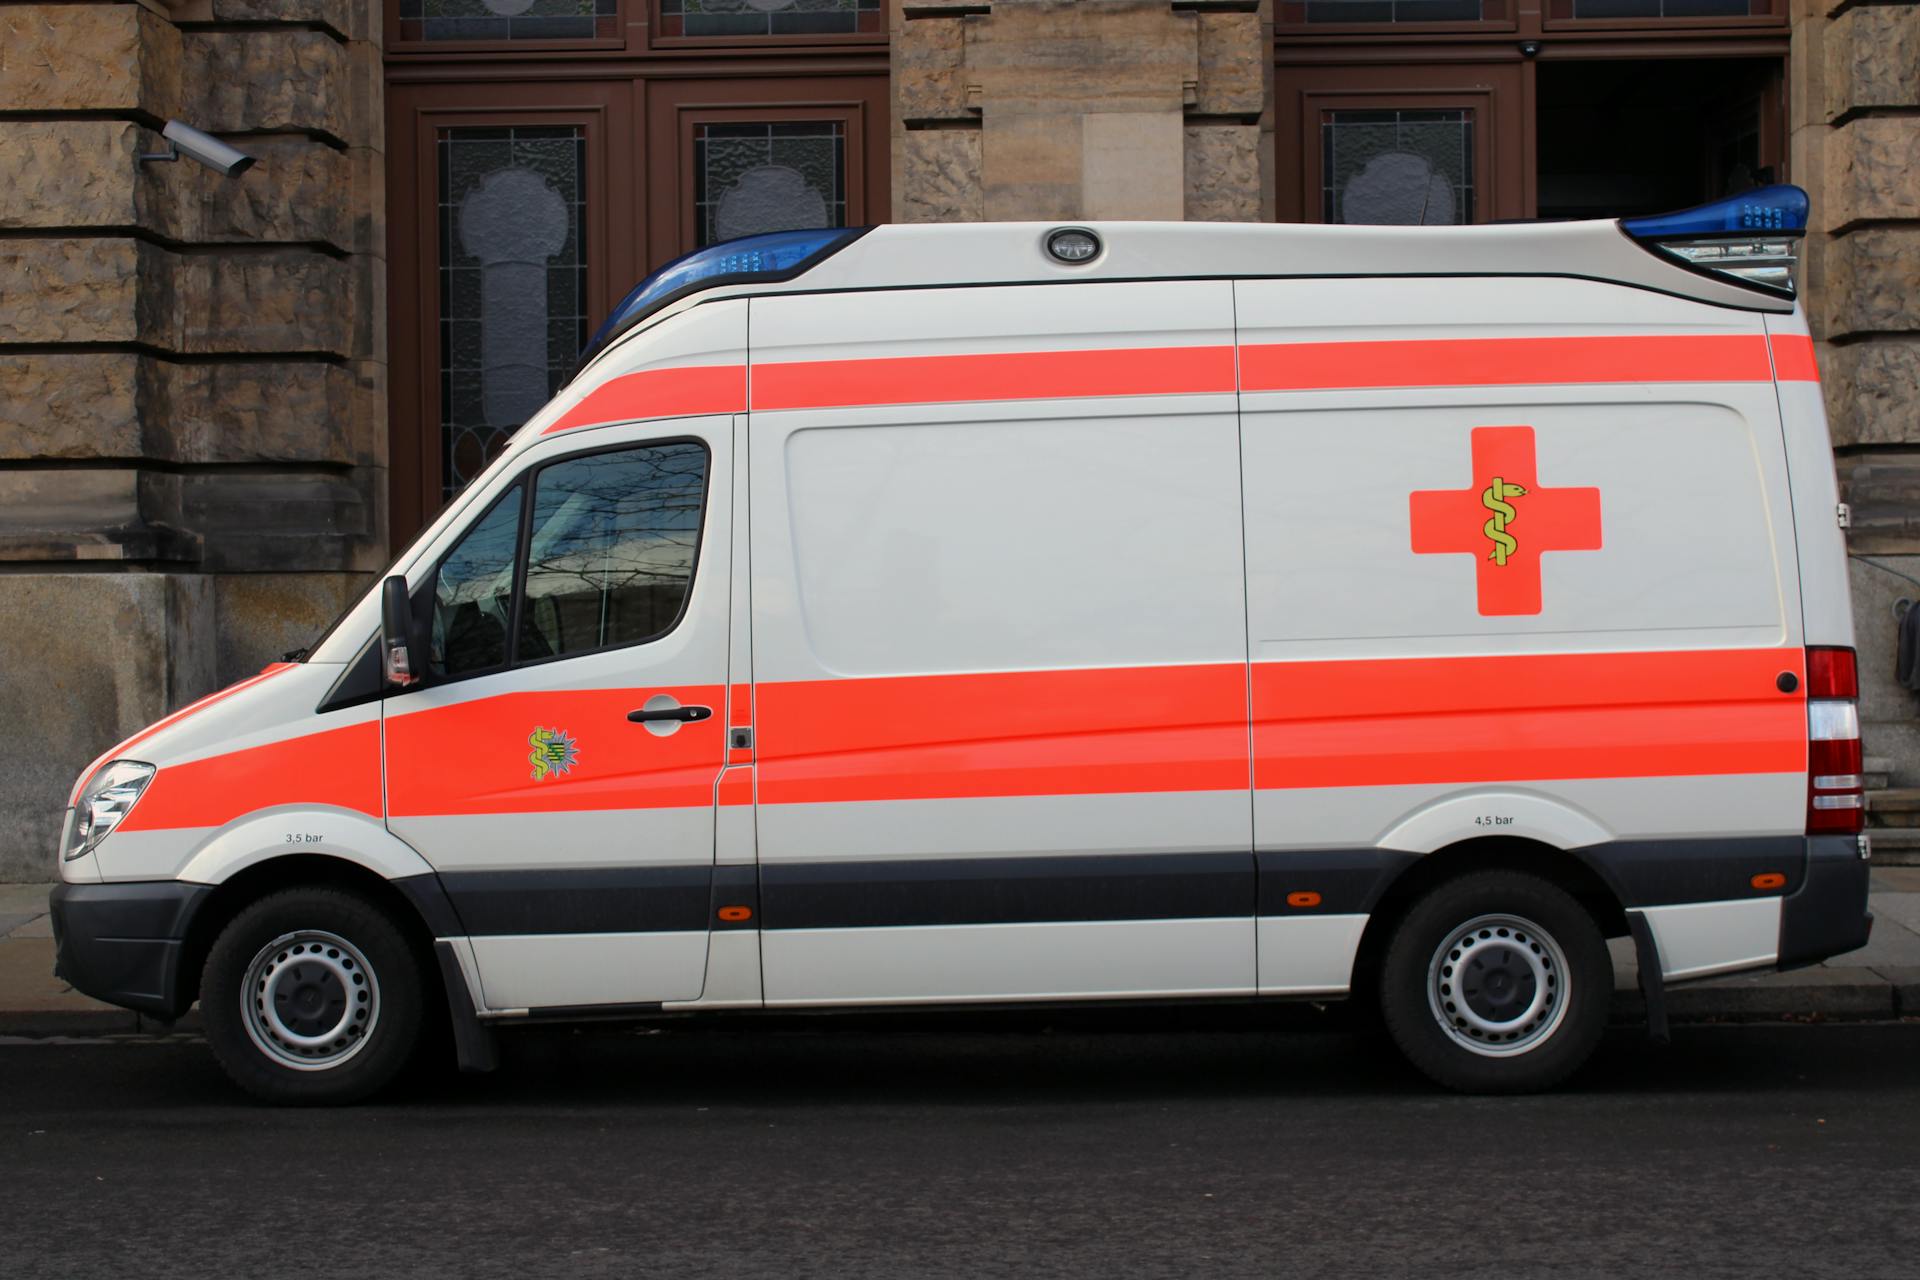 A parked ambulance | Source: Pexels